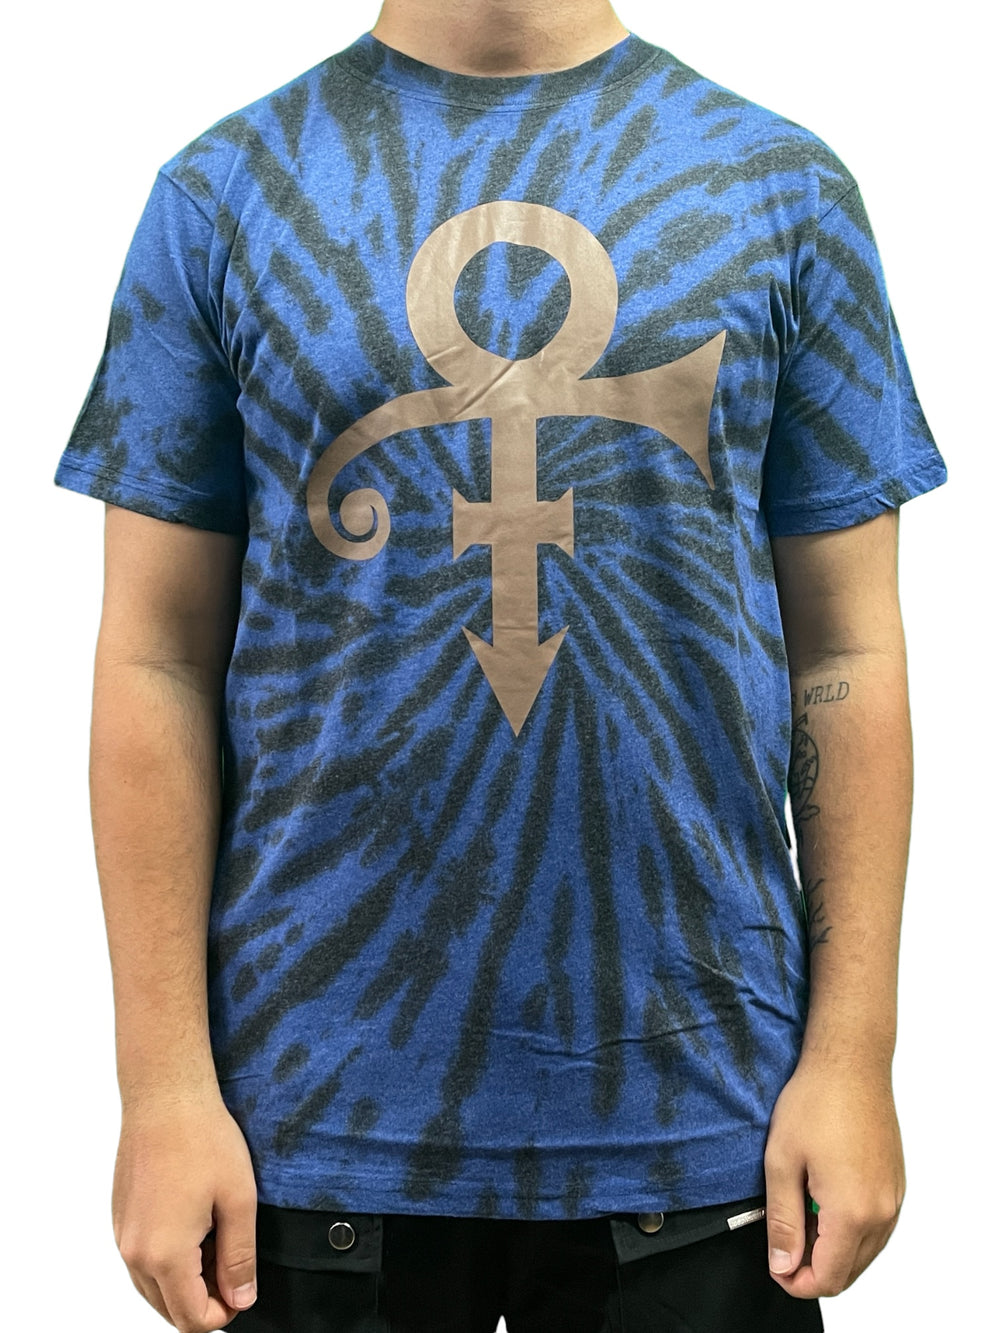 Prince – Gold Love Symbol Dip Dye Design Unisex T-Shirt Various Sizes NEW